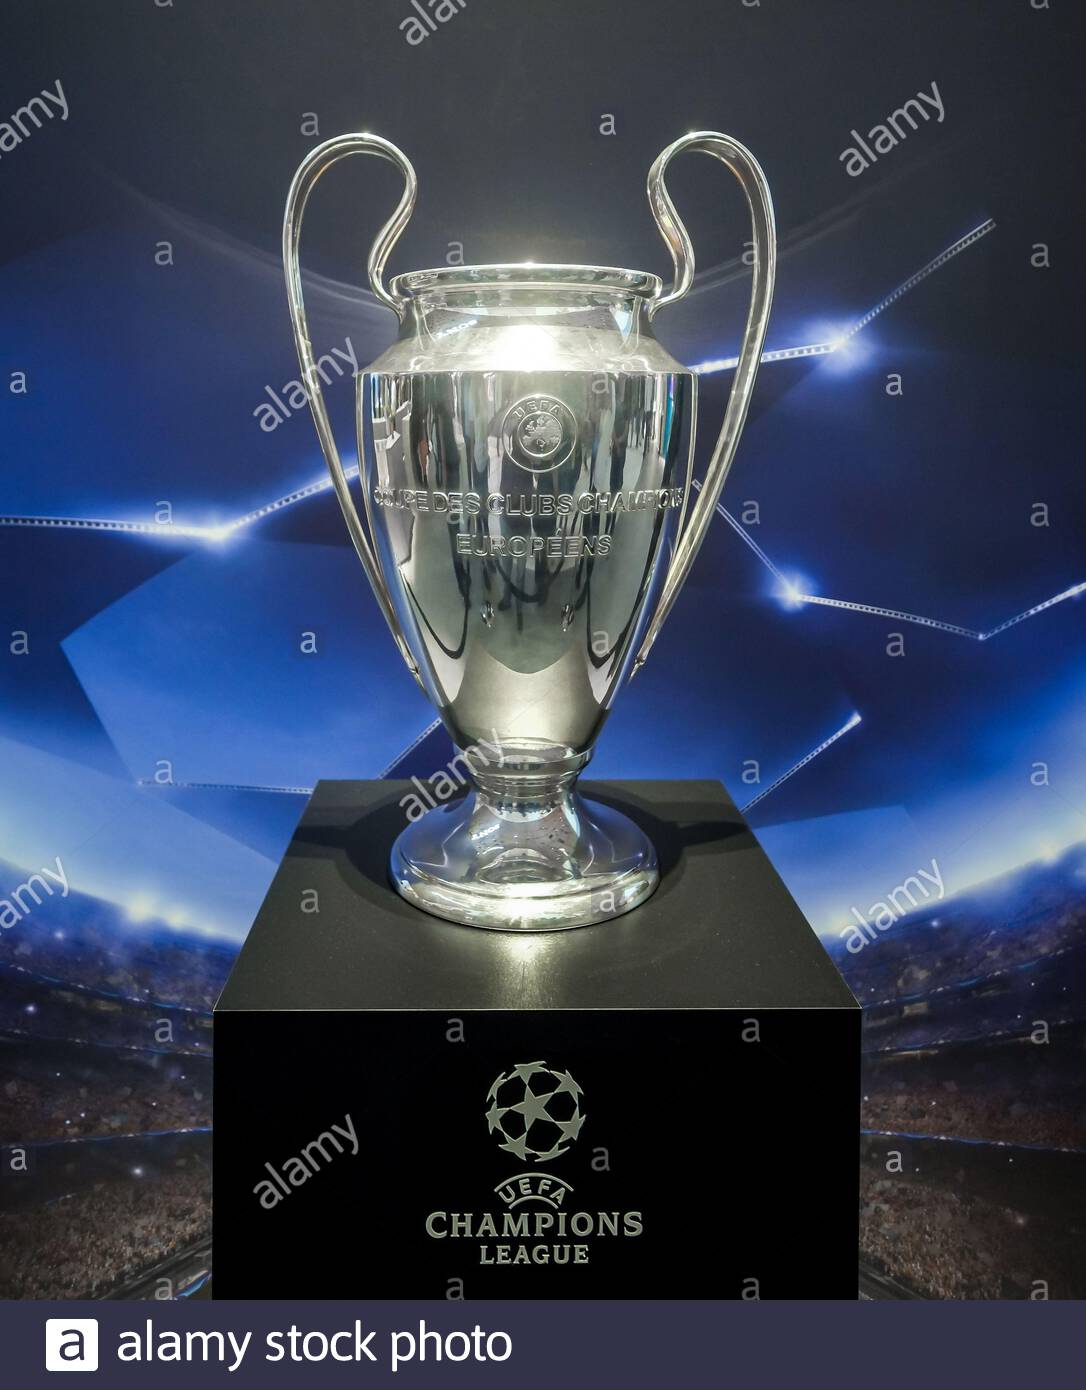 Champions League Trophy Stock Photos & Champions League Trophy Stock